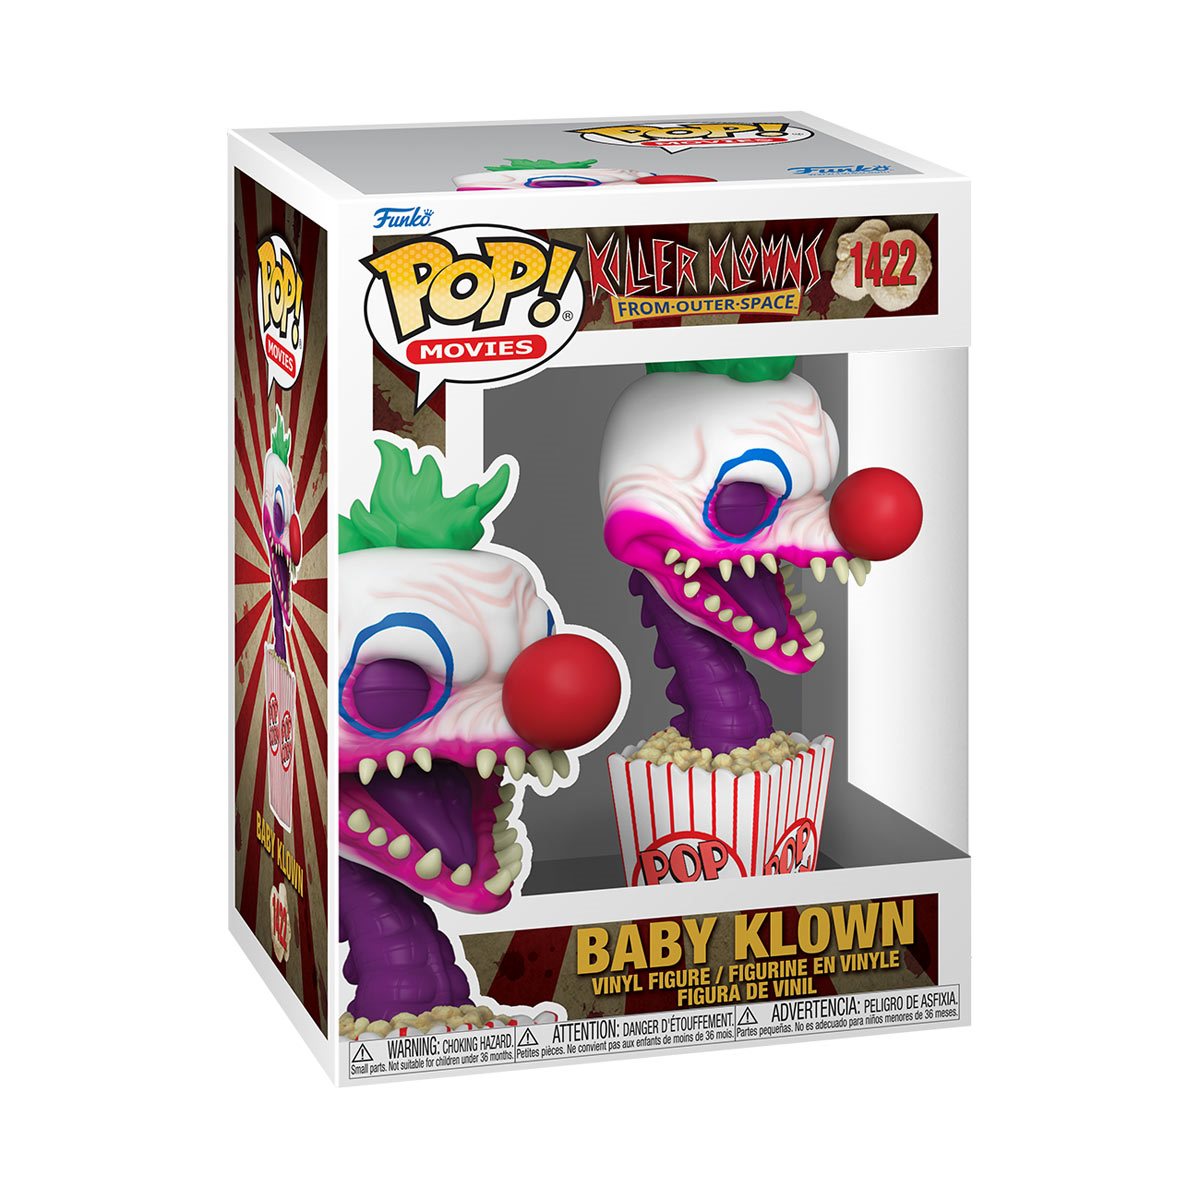 Killer Klowns from Outer Space Baby Klown Pop! Vinyl Figure